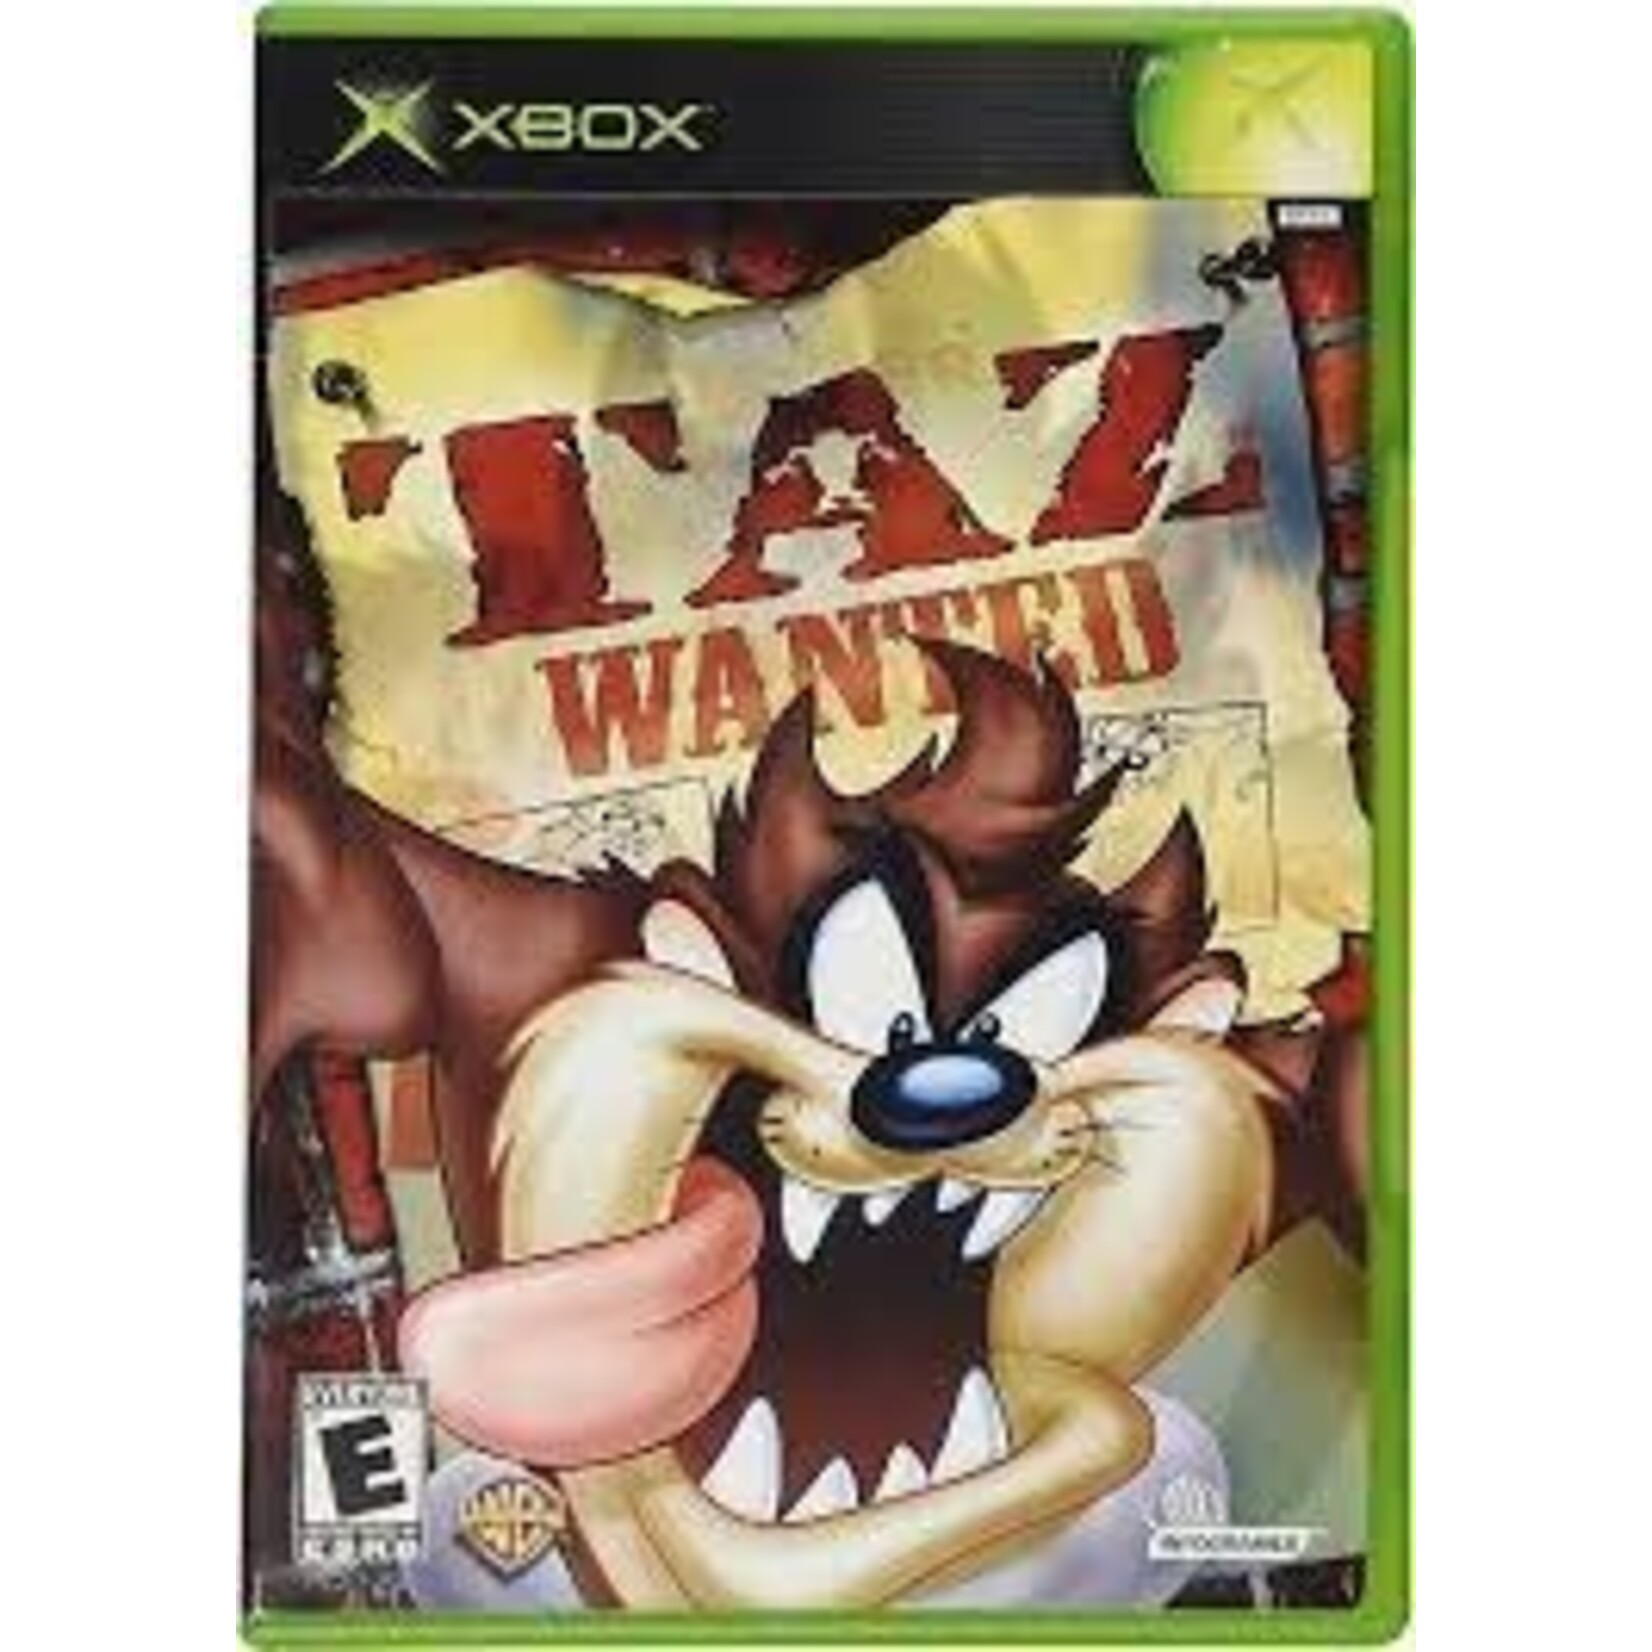 XBU-Taz Wanted